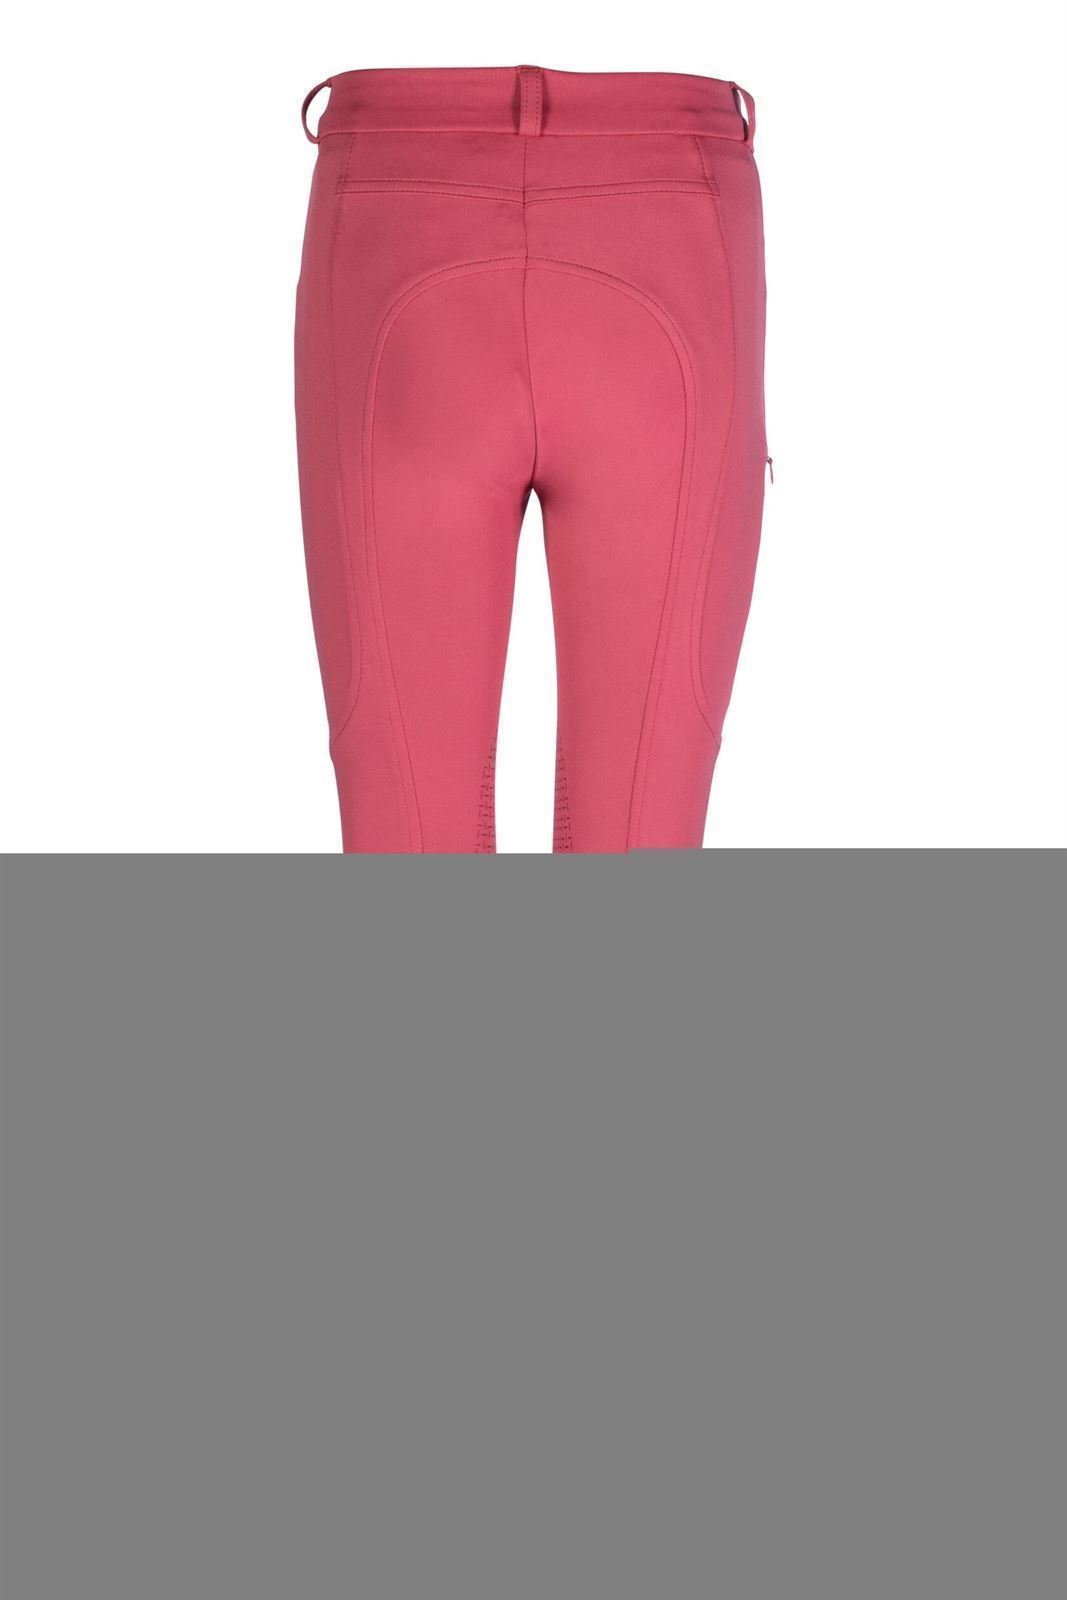 Pantalón unisex HKM Anni grip rodilla, color frambuesa - Imagen 5